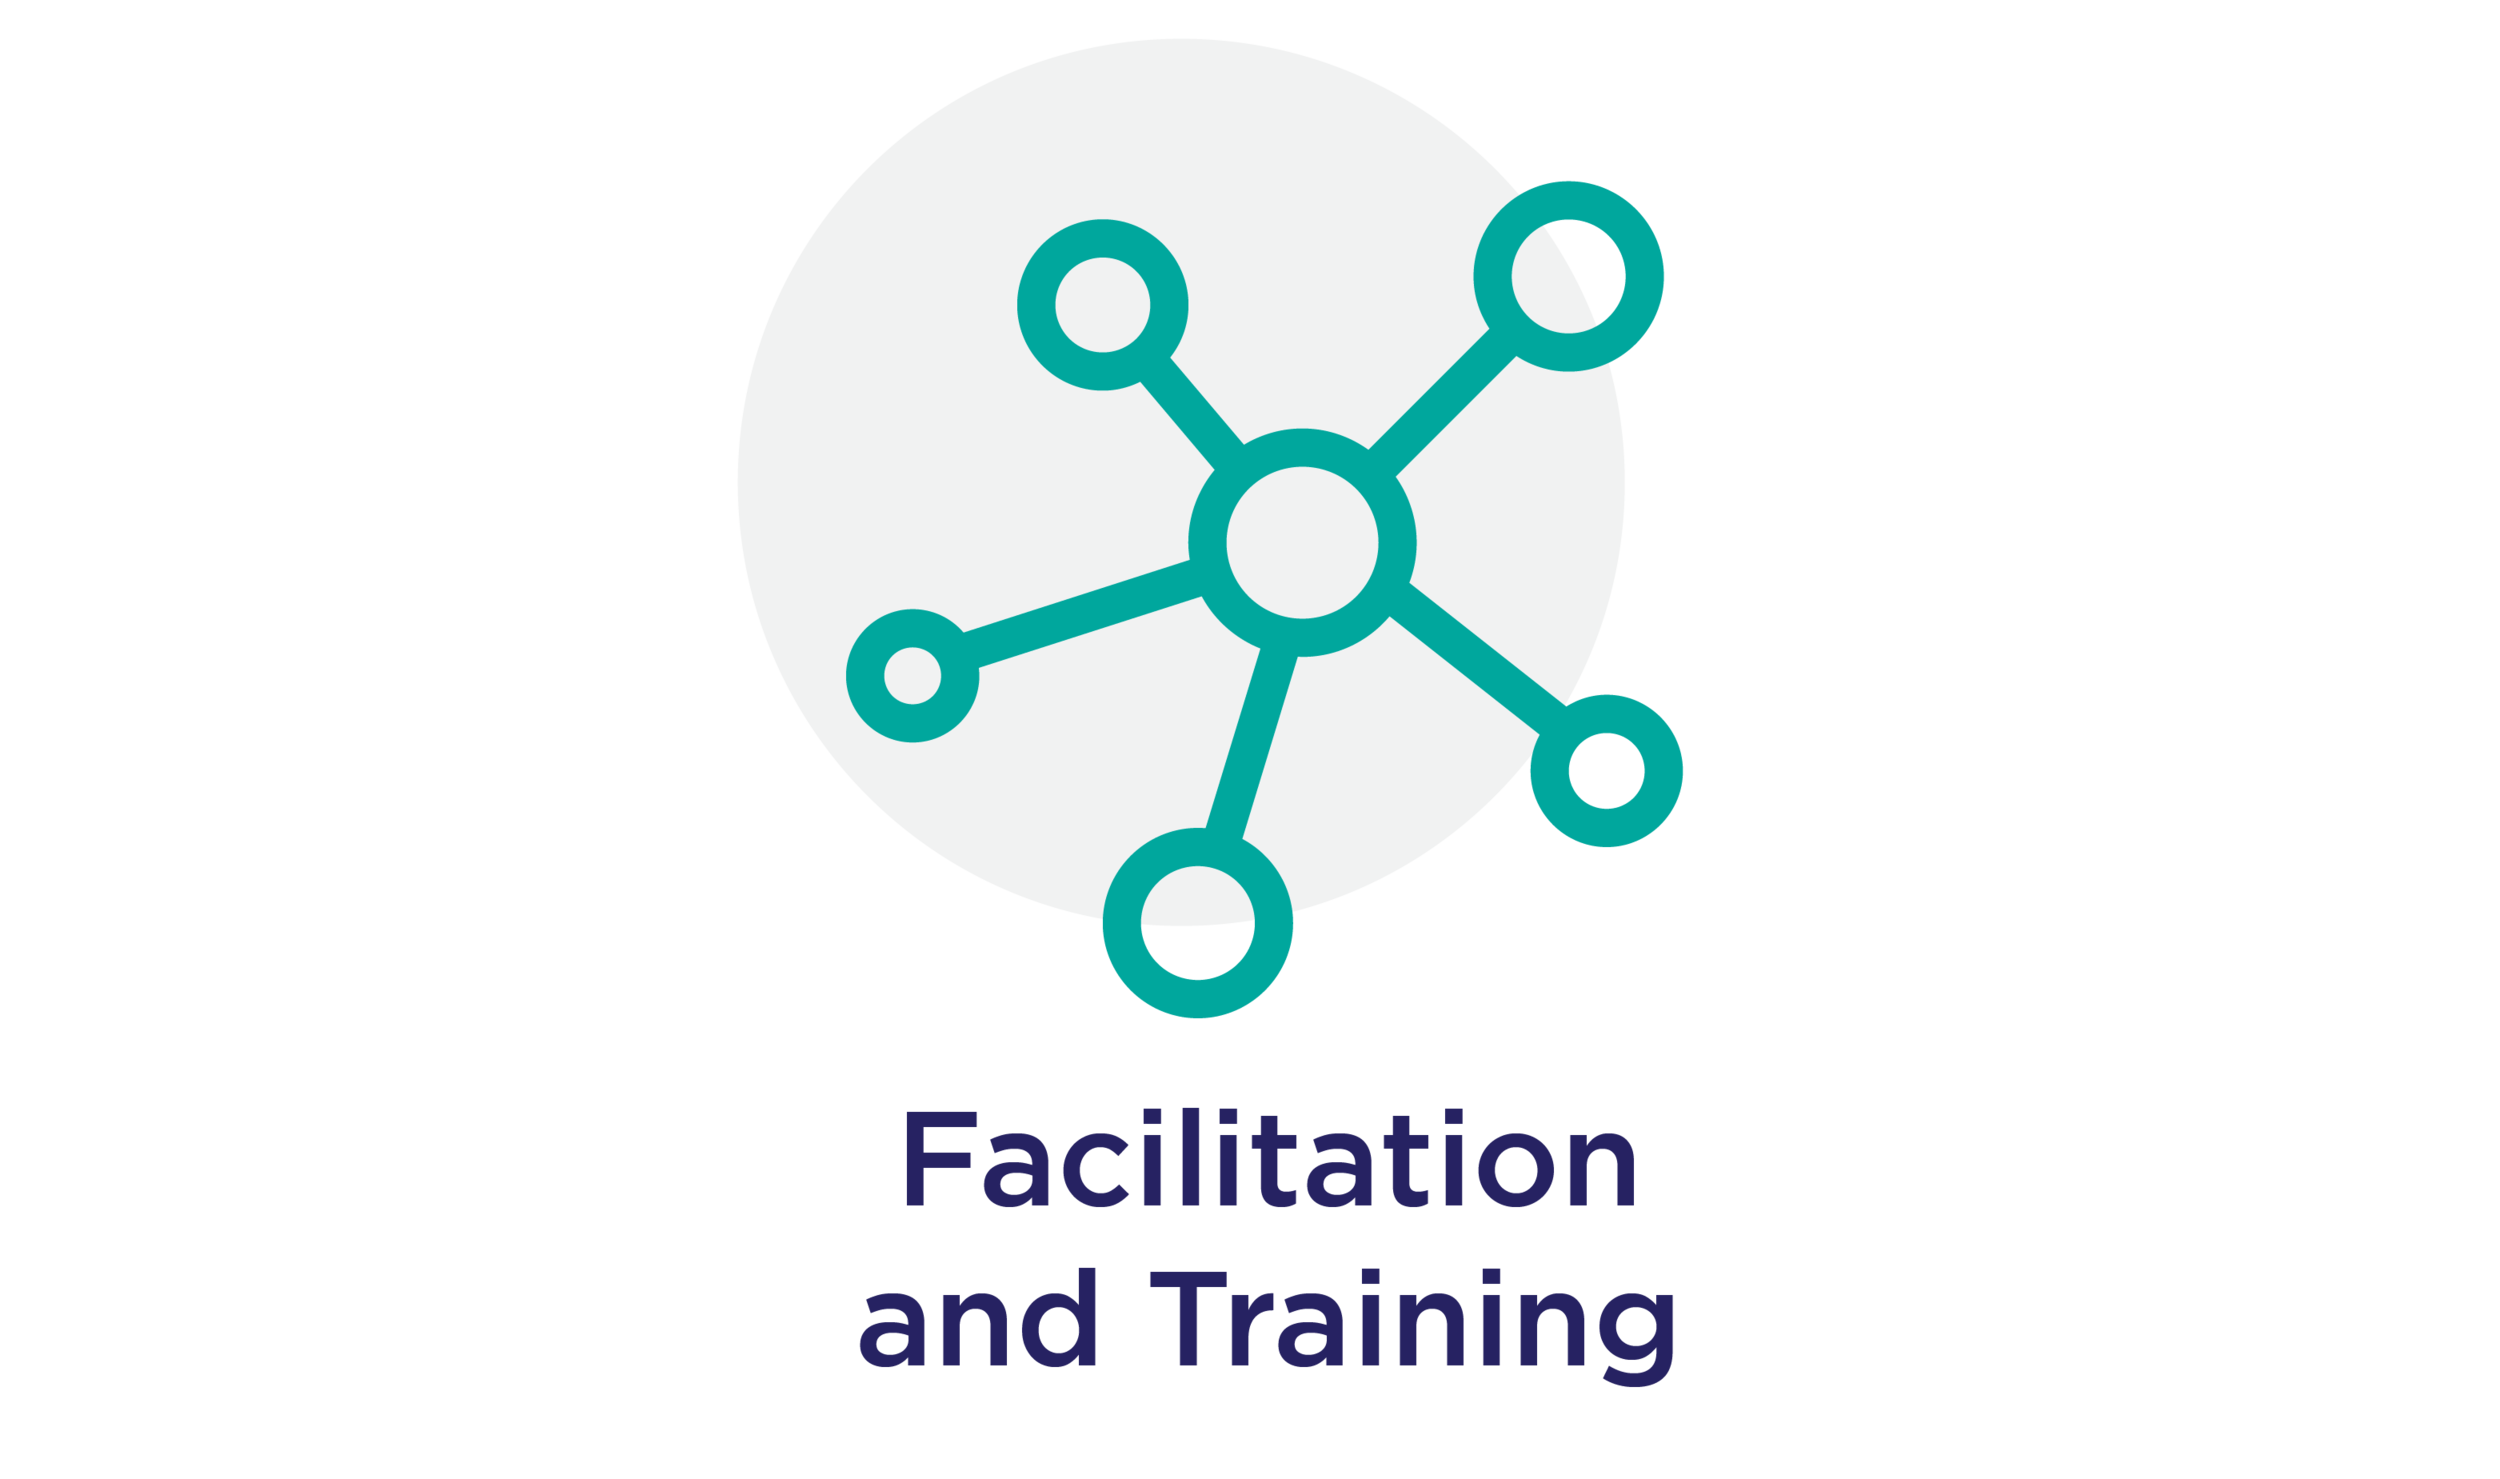 Facilitation and Training for you leadership team